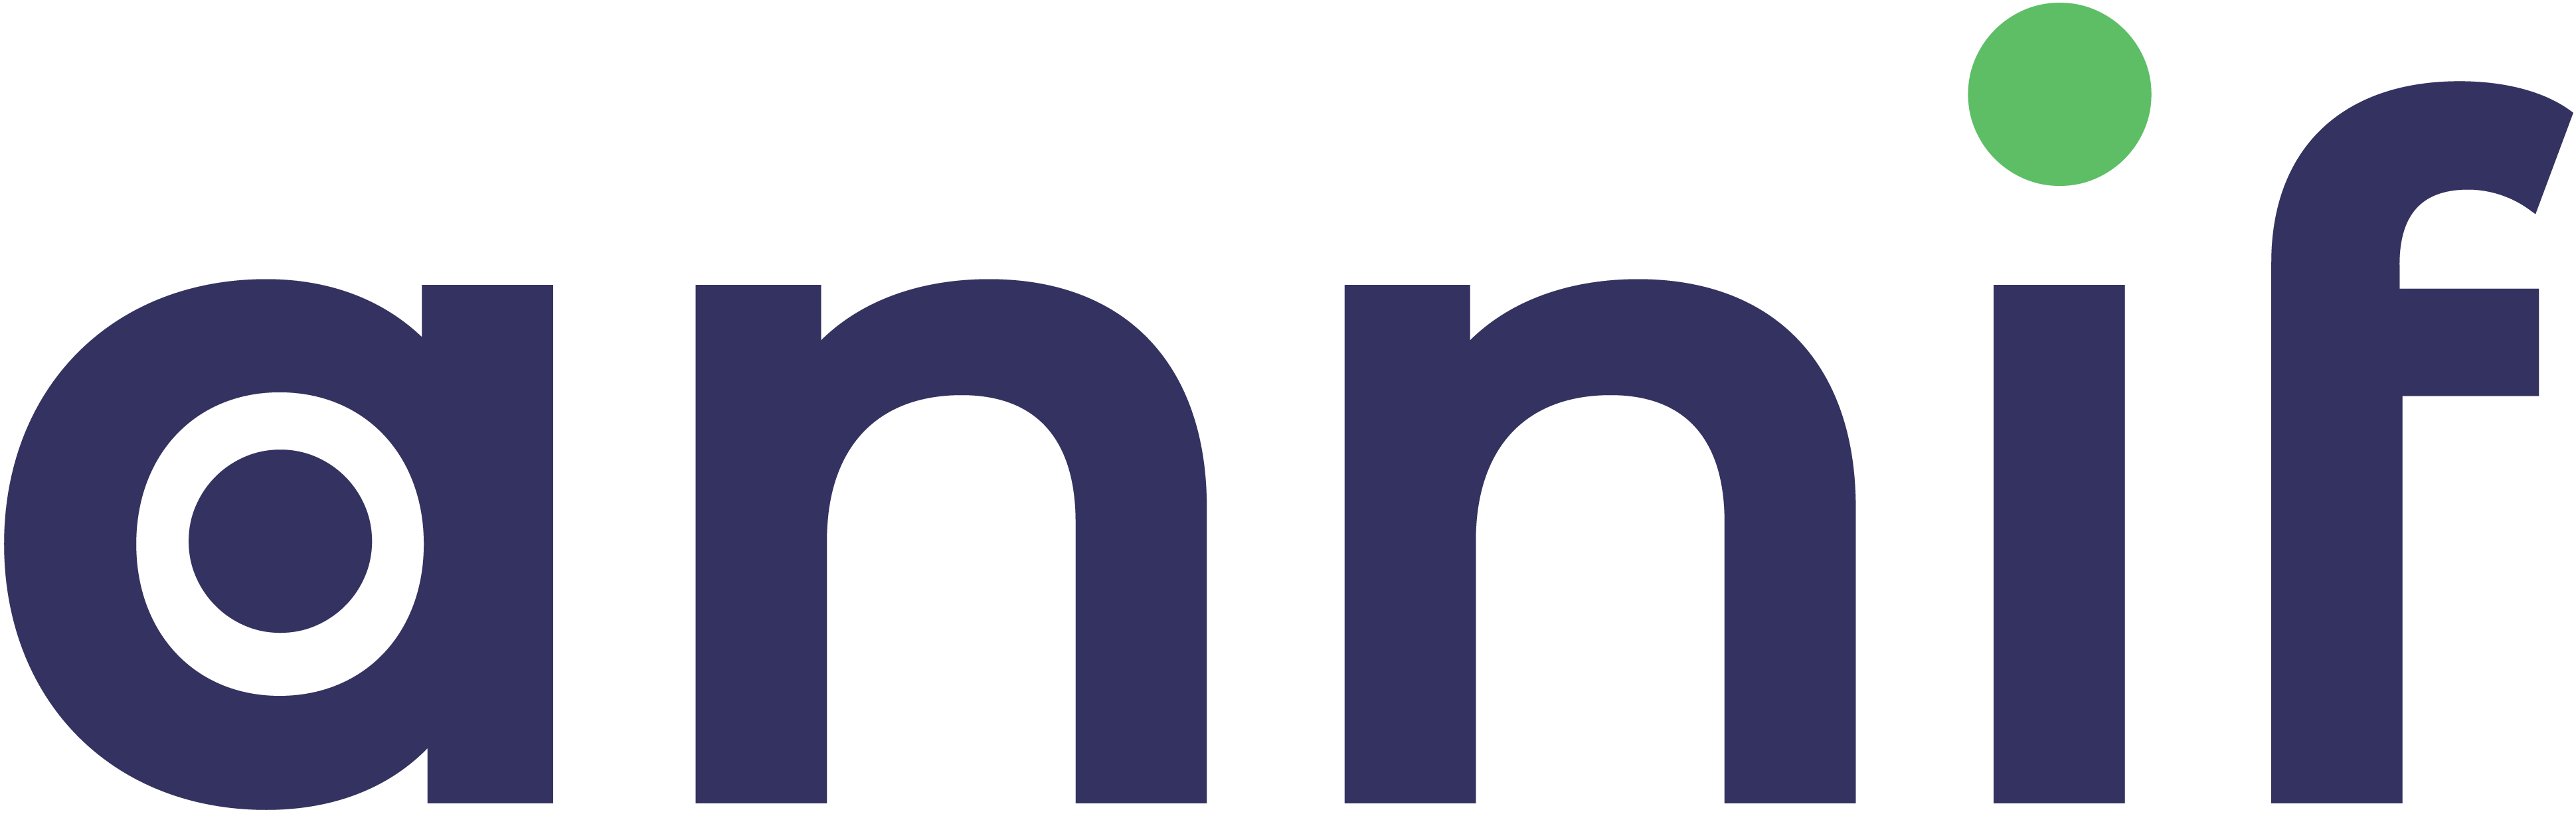 annif-logo